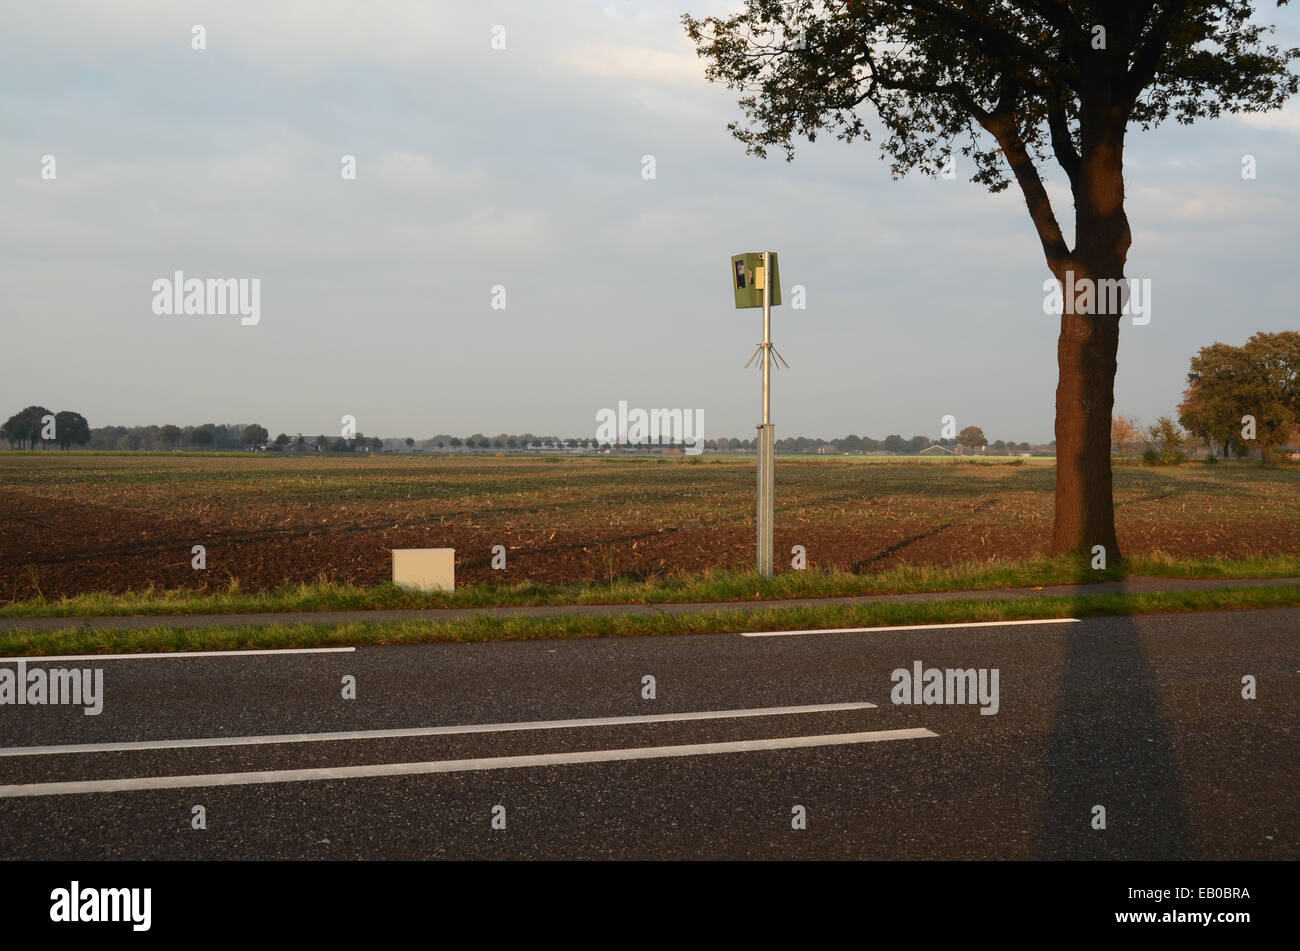 Digital speed camera, N280 Baexem Netherlands Stock Photo - Alamy